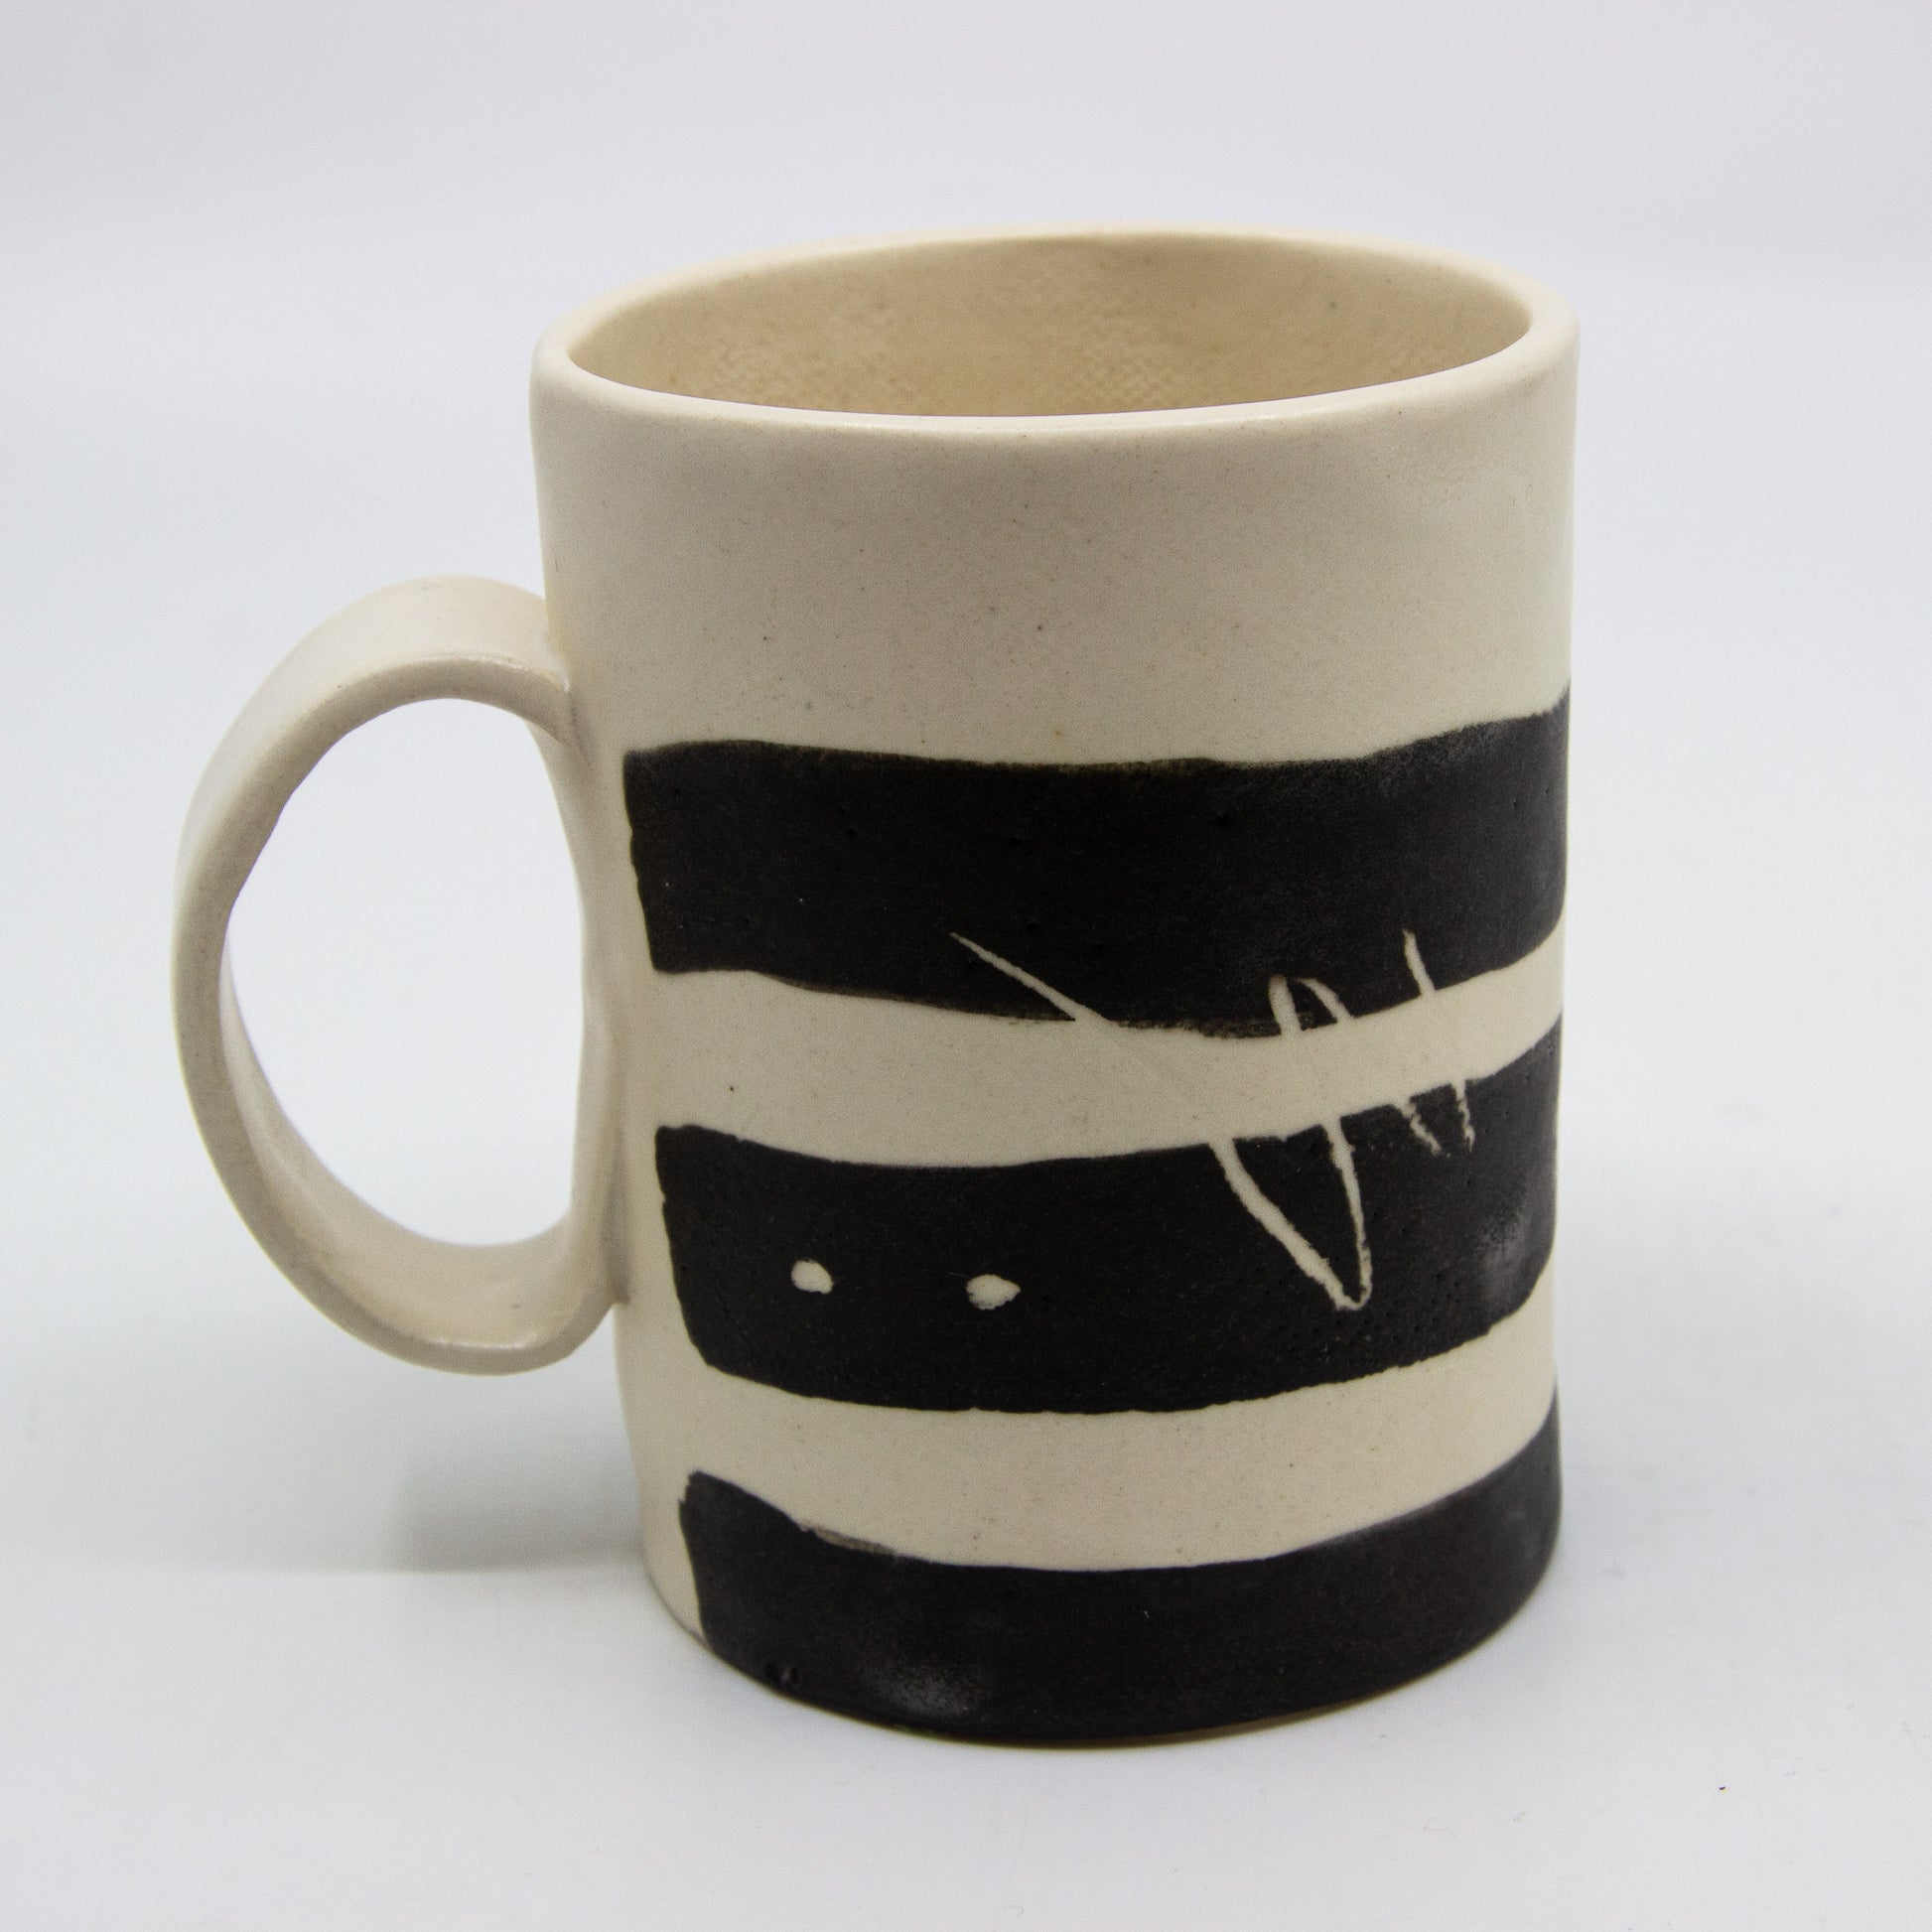 Black and white stripped mug